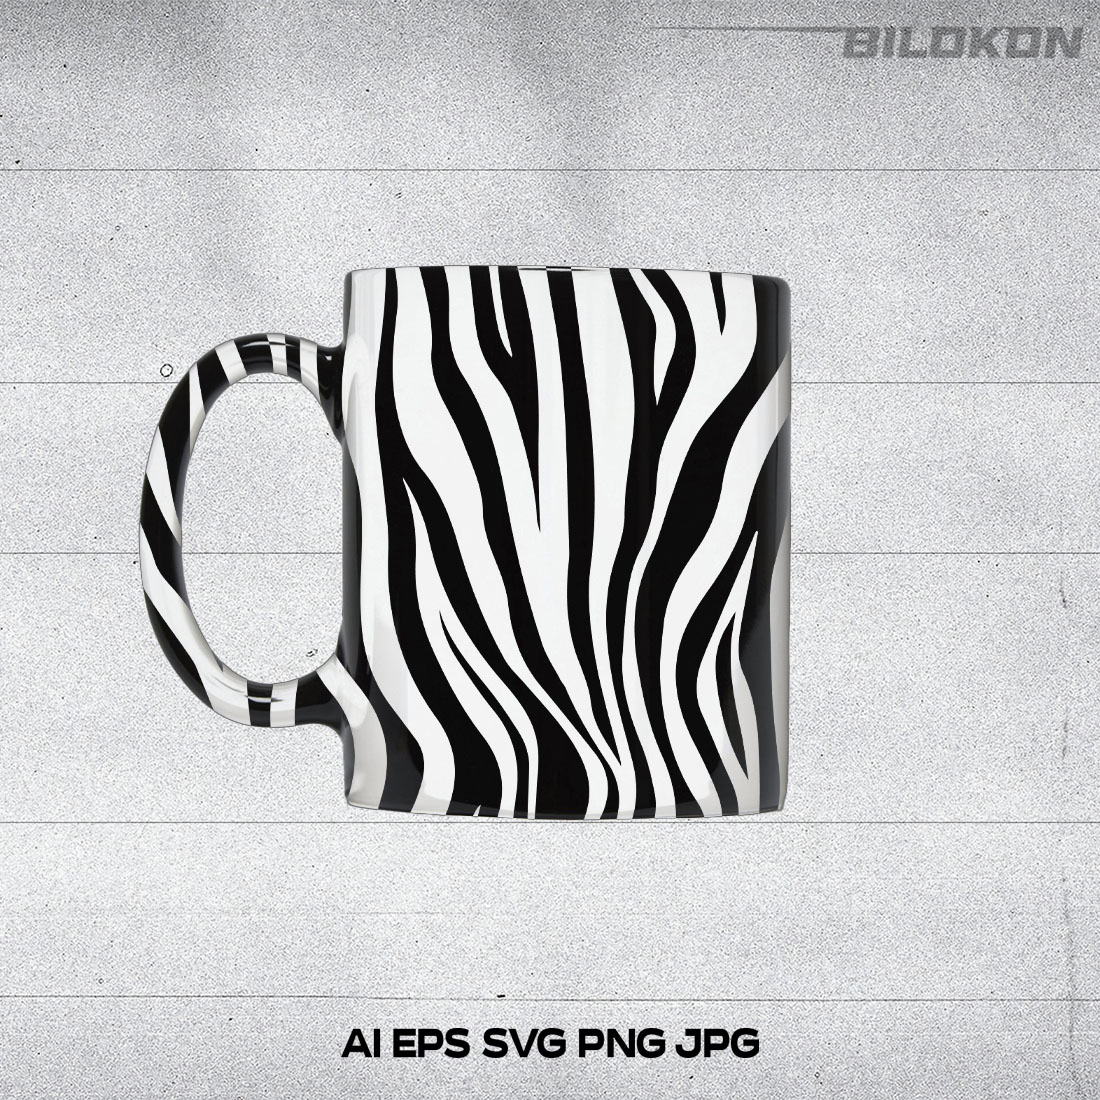 Black and white zebra print coffee mug.